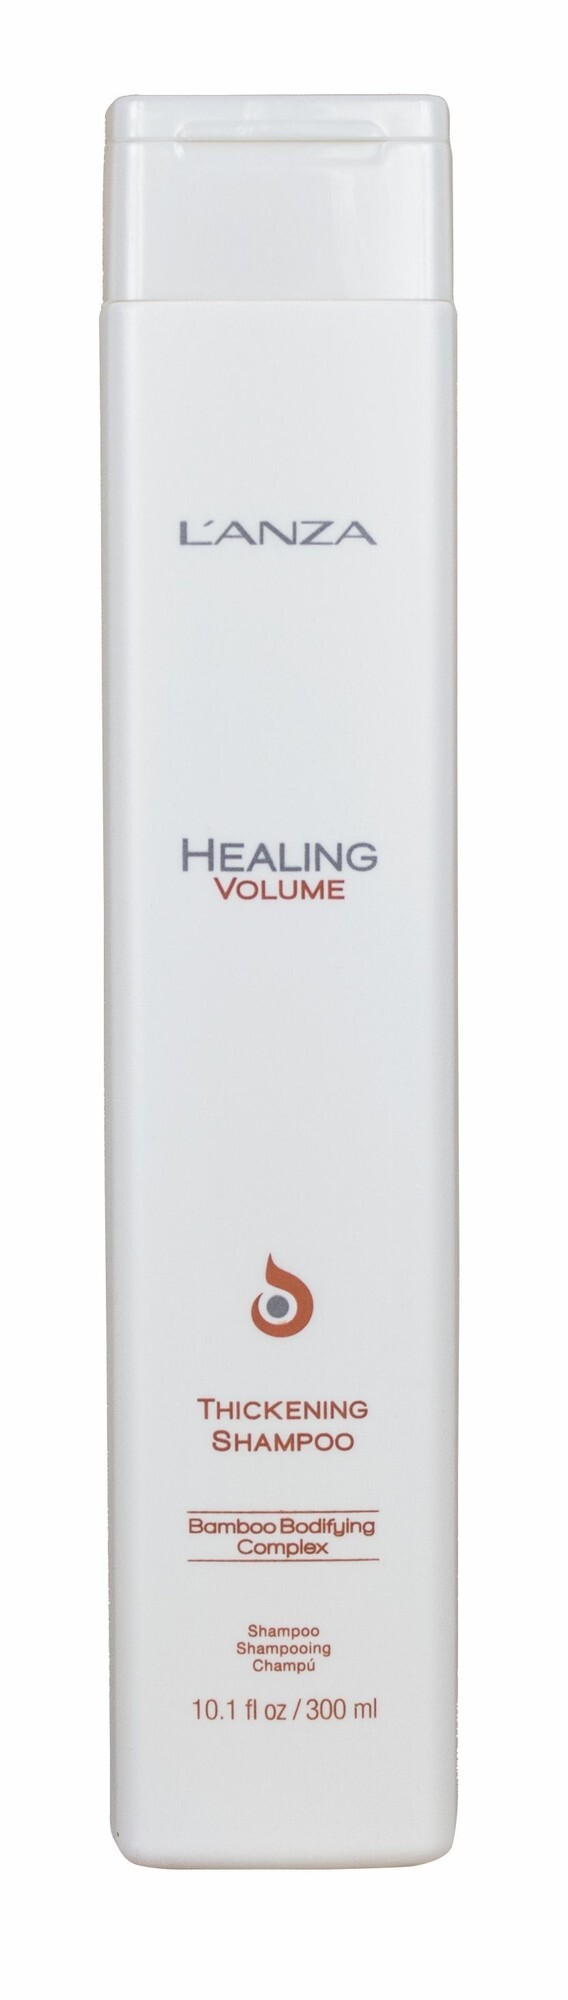 Lanza Healing Volume Thickening - 300 ml - Shampoo